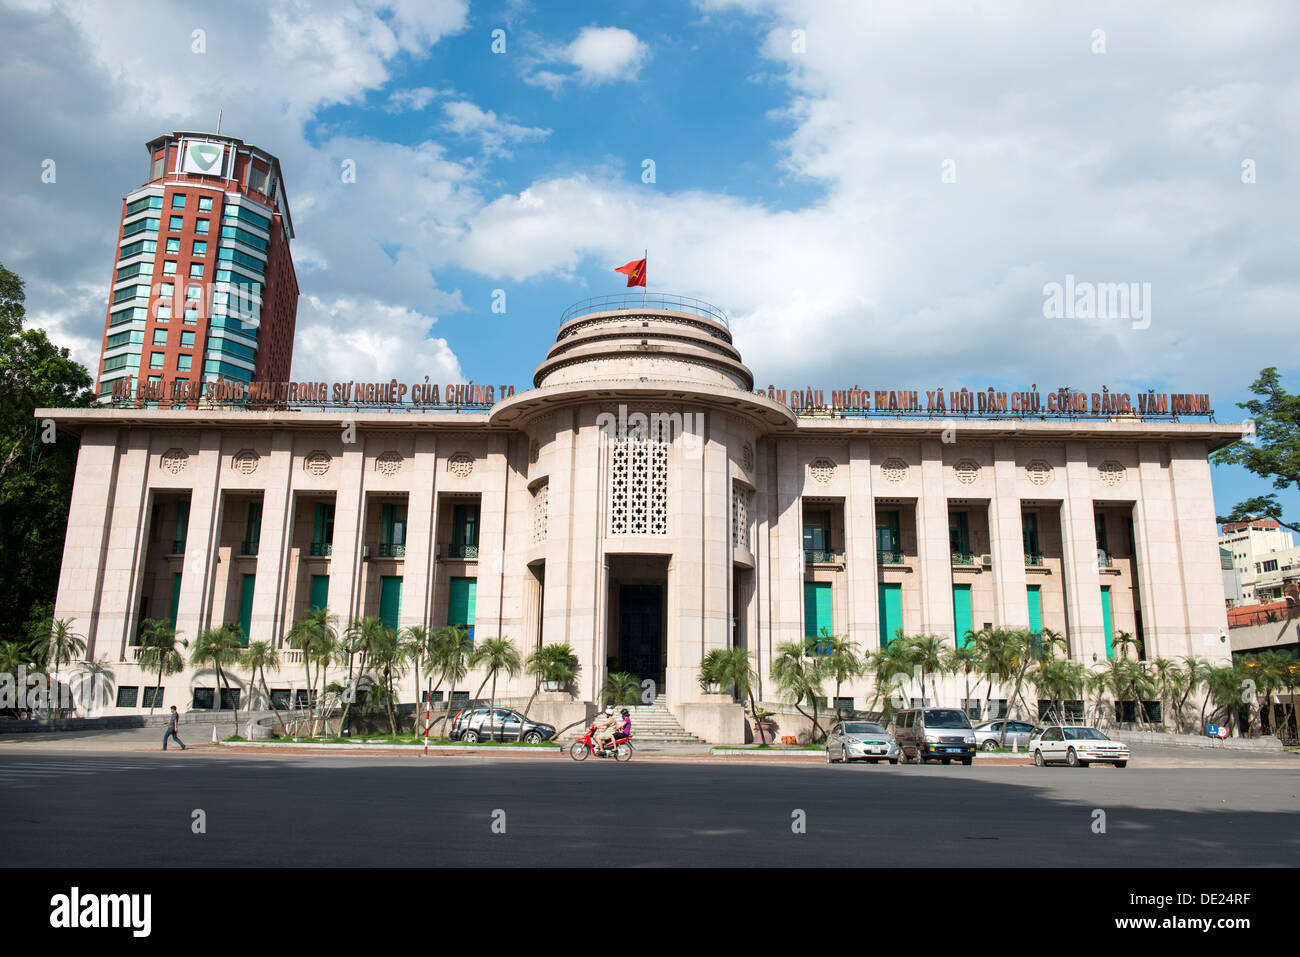 Vietnamese Government building in Hanoi, Vietnam Stock Photo